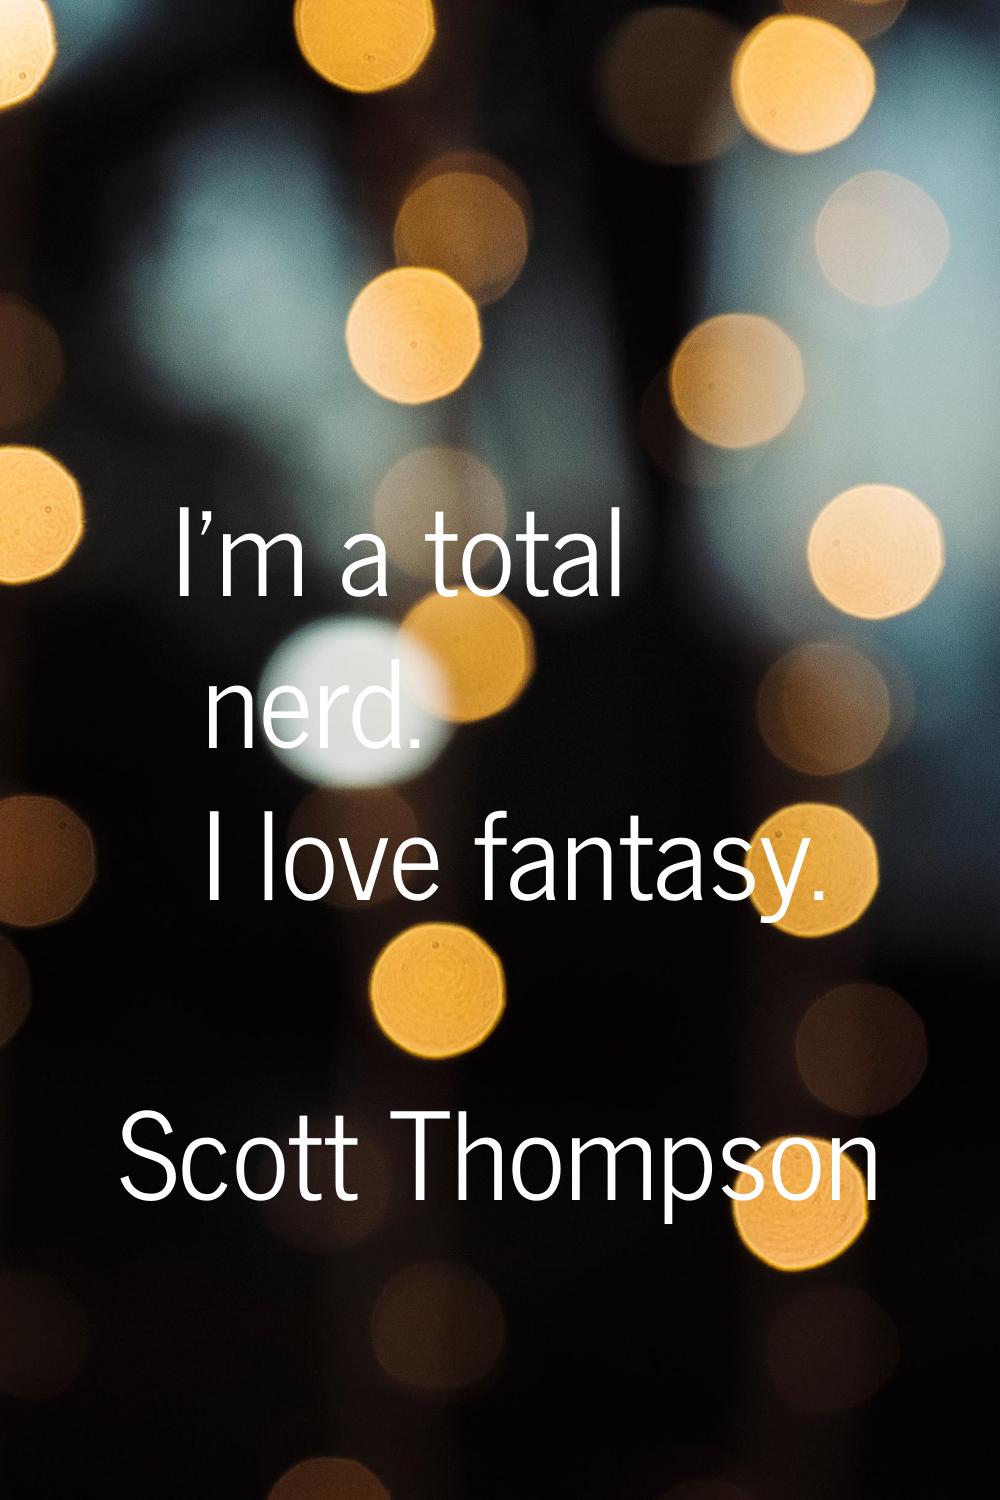 I'm a total nerd. I love fantasy.